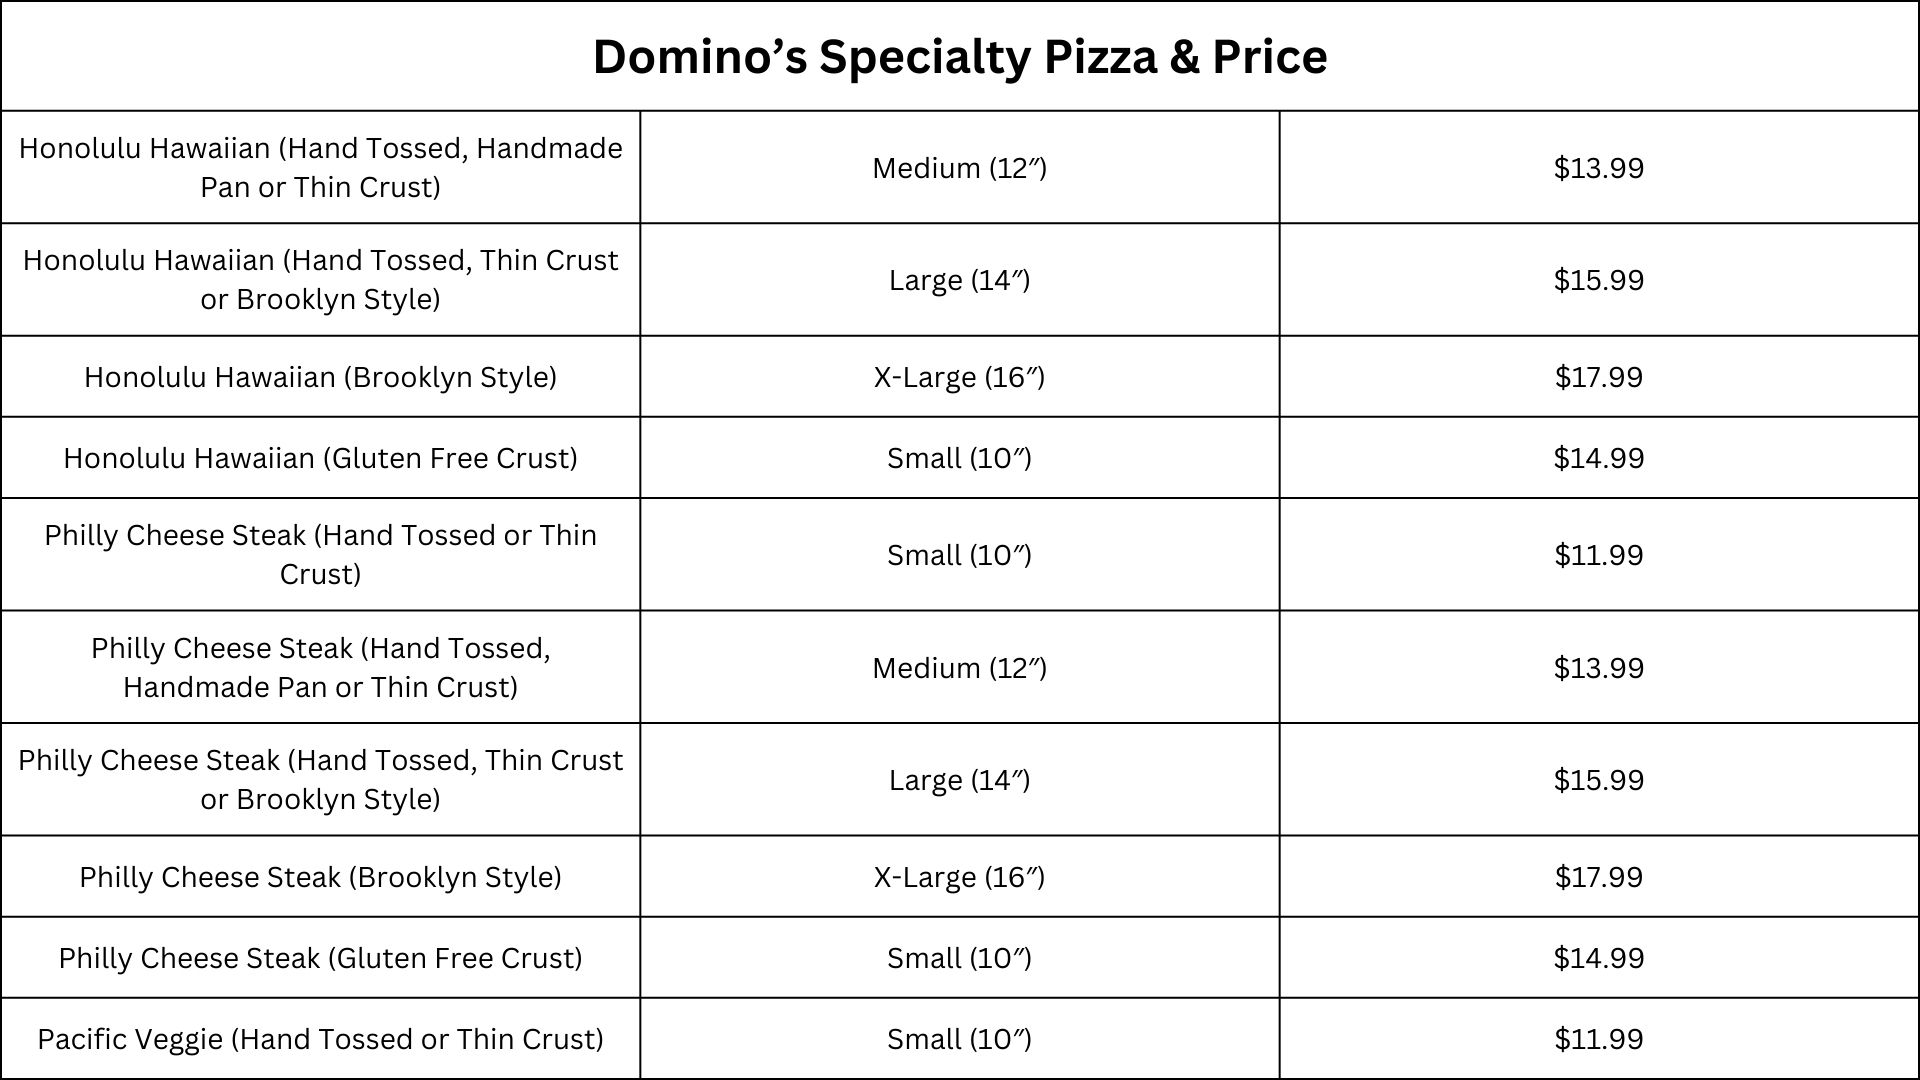 Domino’s Specialty Pizza & Price